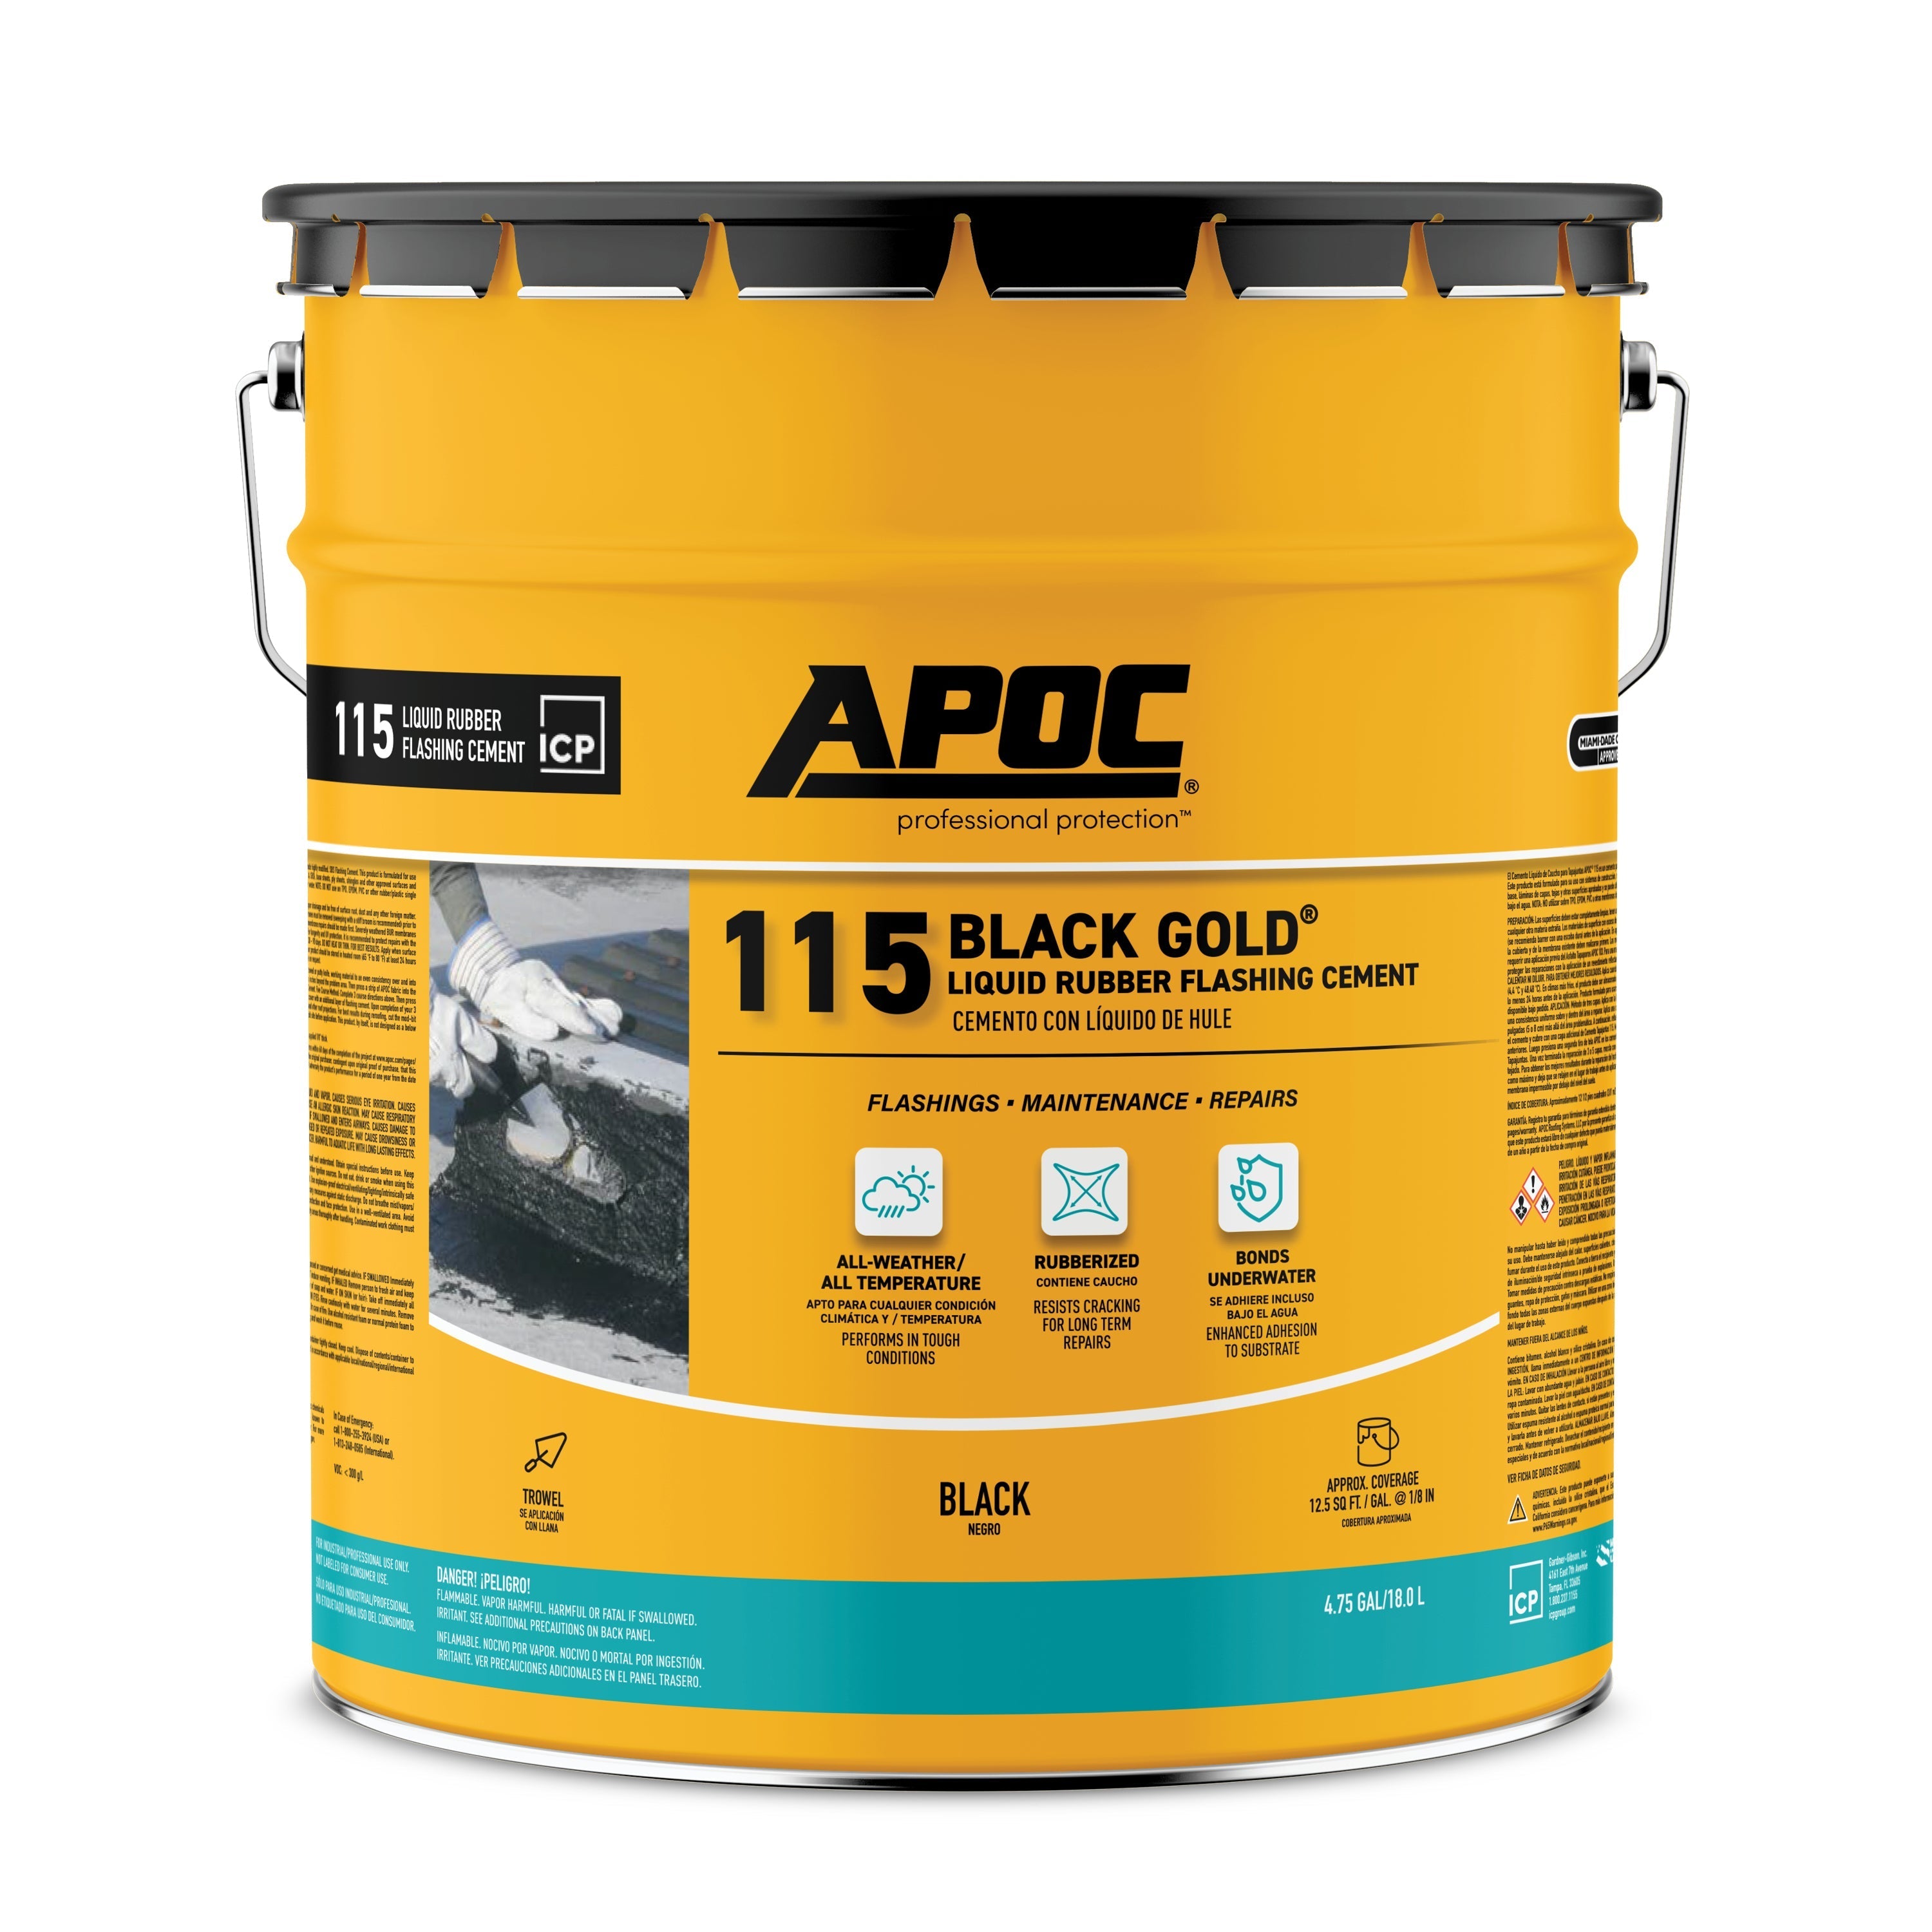 APOC<sup>®</sup> 115 Black Gold<sup>®</sup> Liquid Rubber Flashing Cement